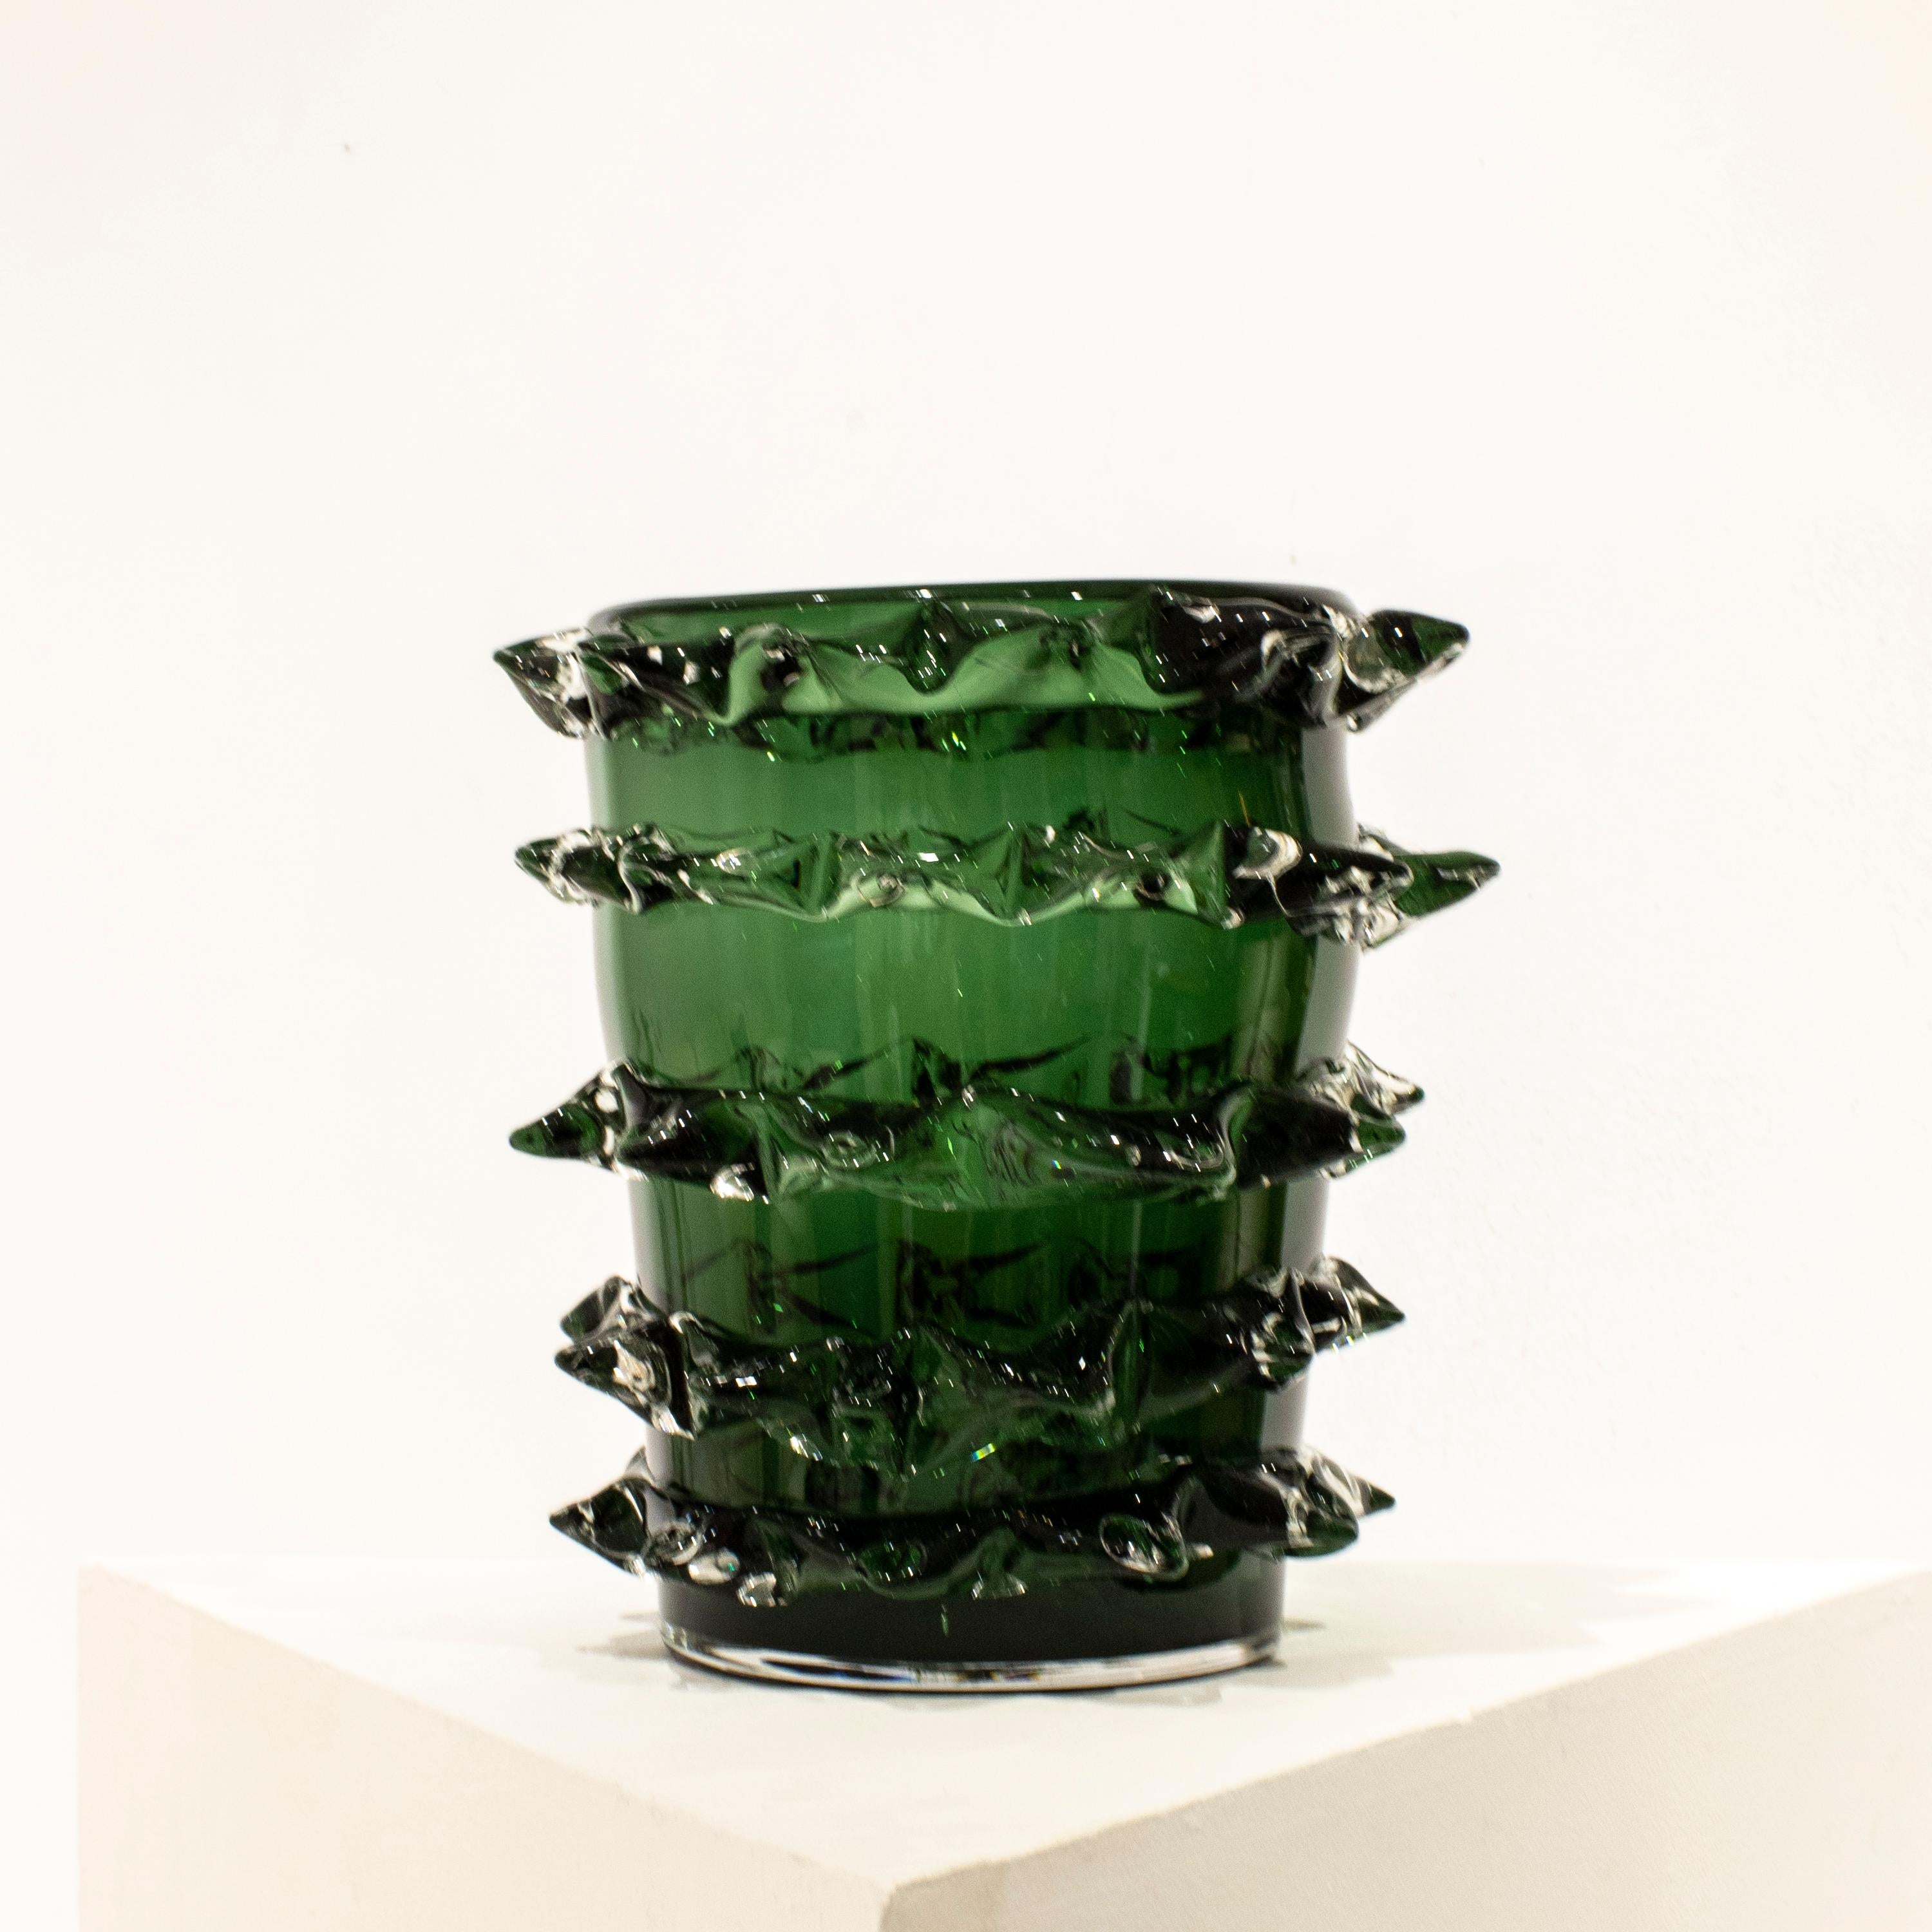 Vase aus mundgeblasenem grünem, halbtransparentem italienischem Glas.